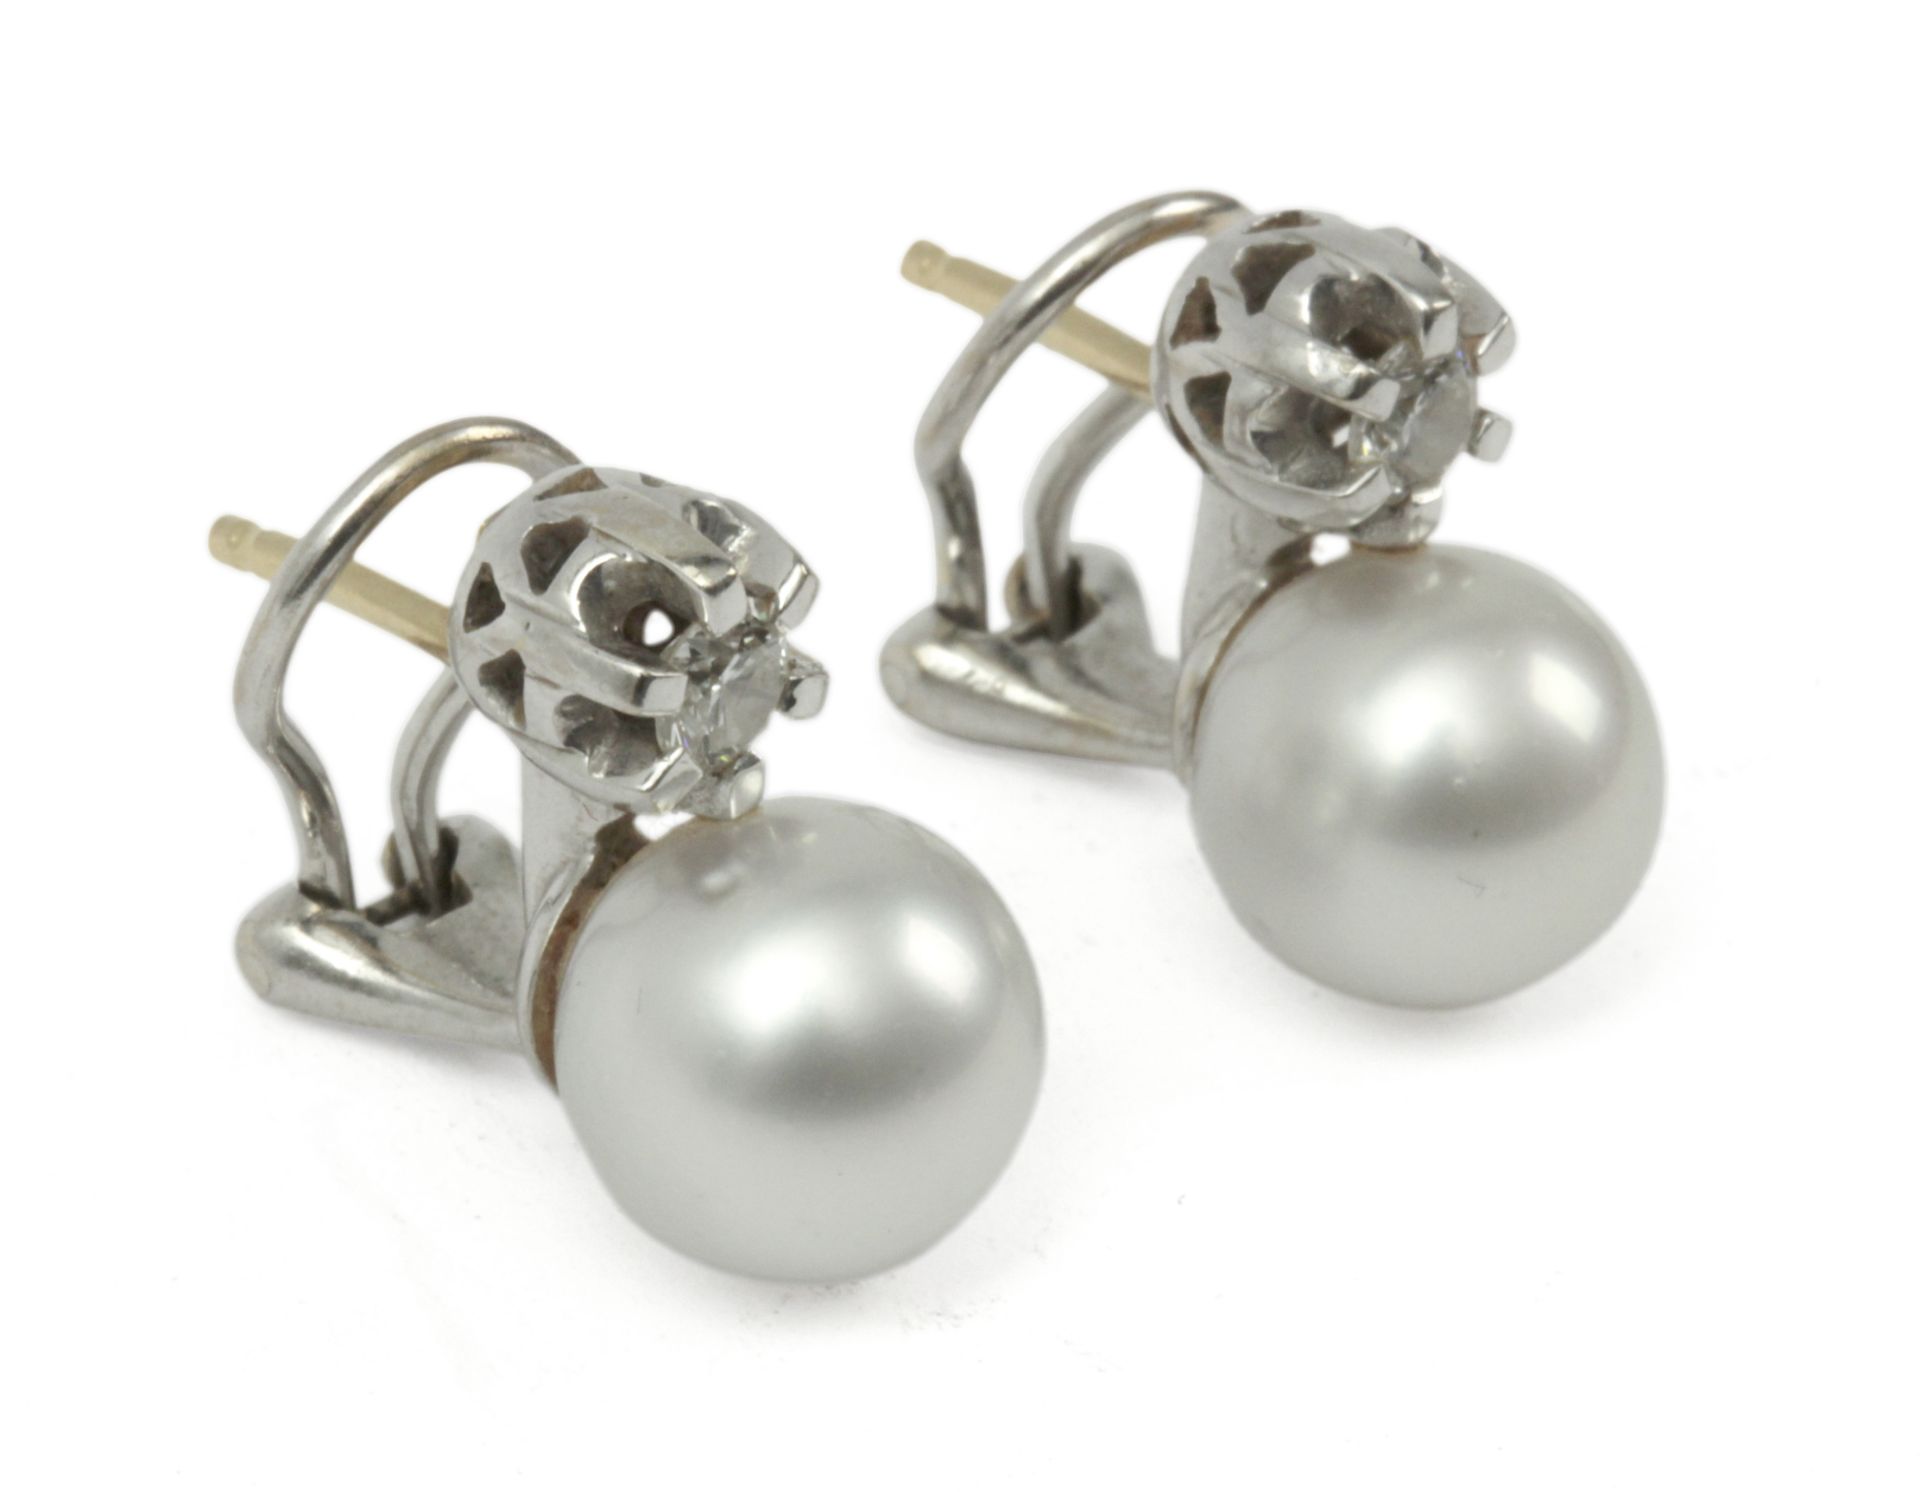 Toi et moi' earrings in 18k. white gold, brilliant cut diamonds and Australian pearls - Image 2 of 2